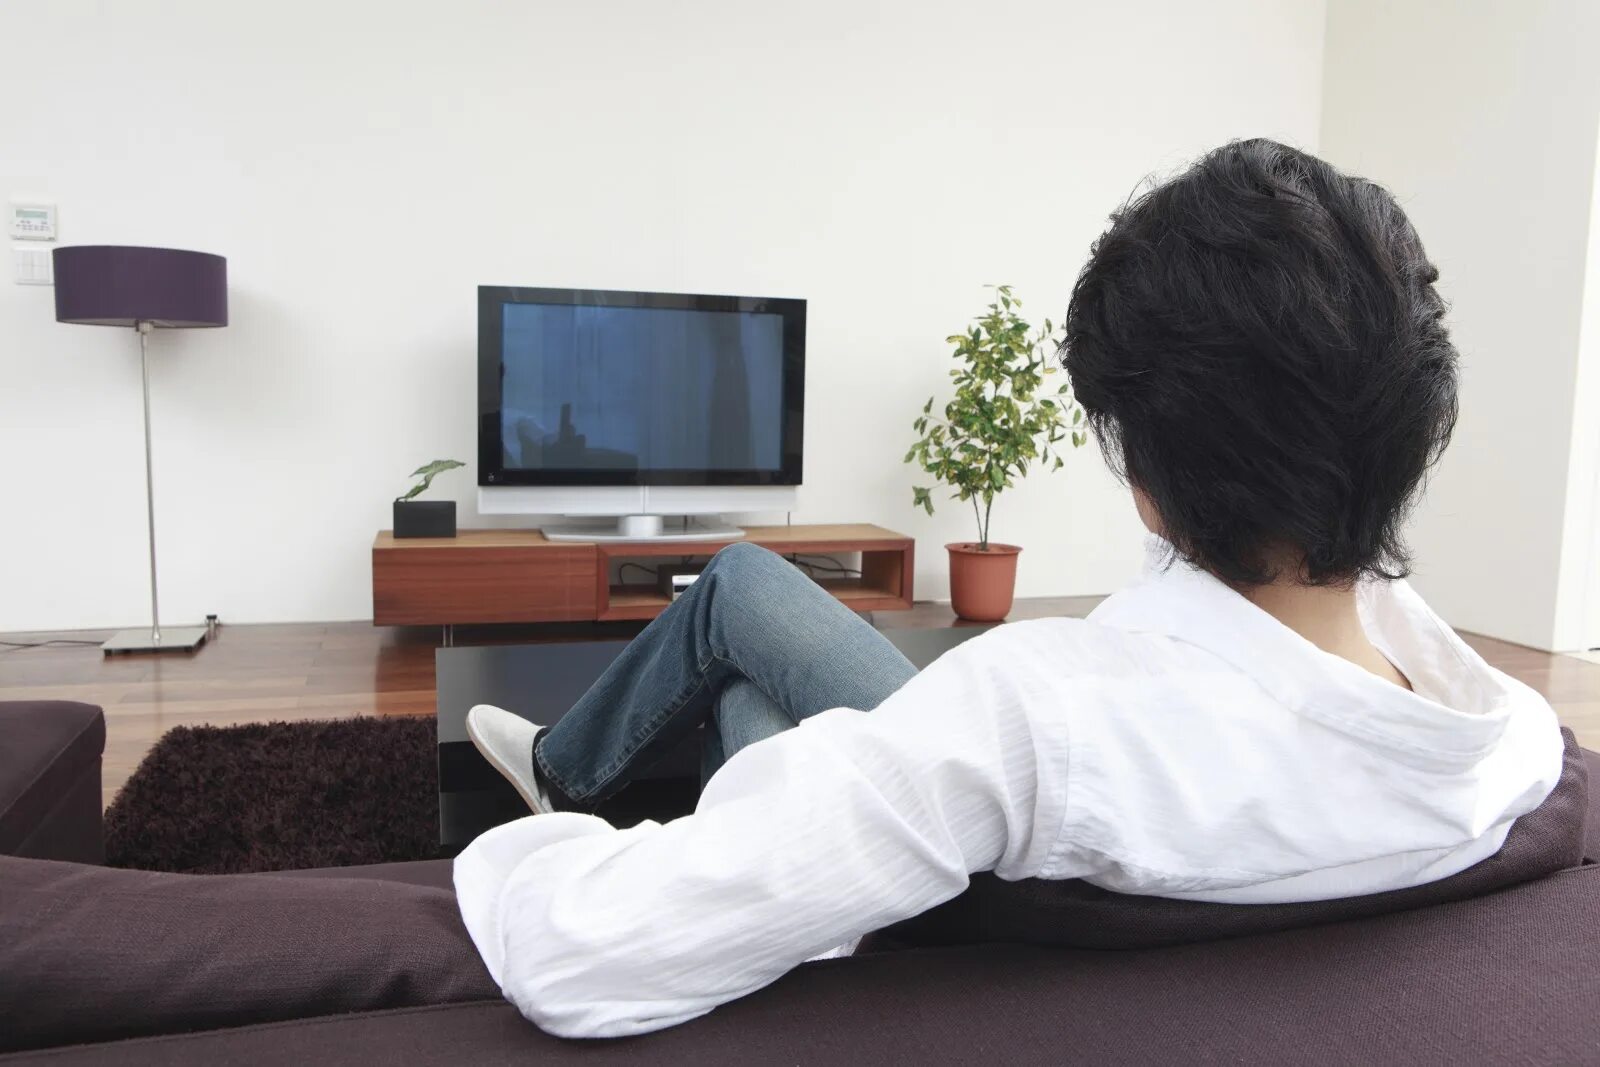 Сижу перед телевизором. Человек телевизор. Человек сидит перед телевизором. Мужчина перед теликом. Сидит на телевизоре.